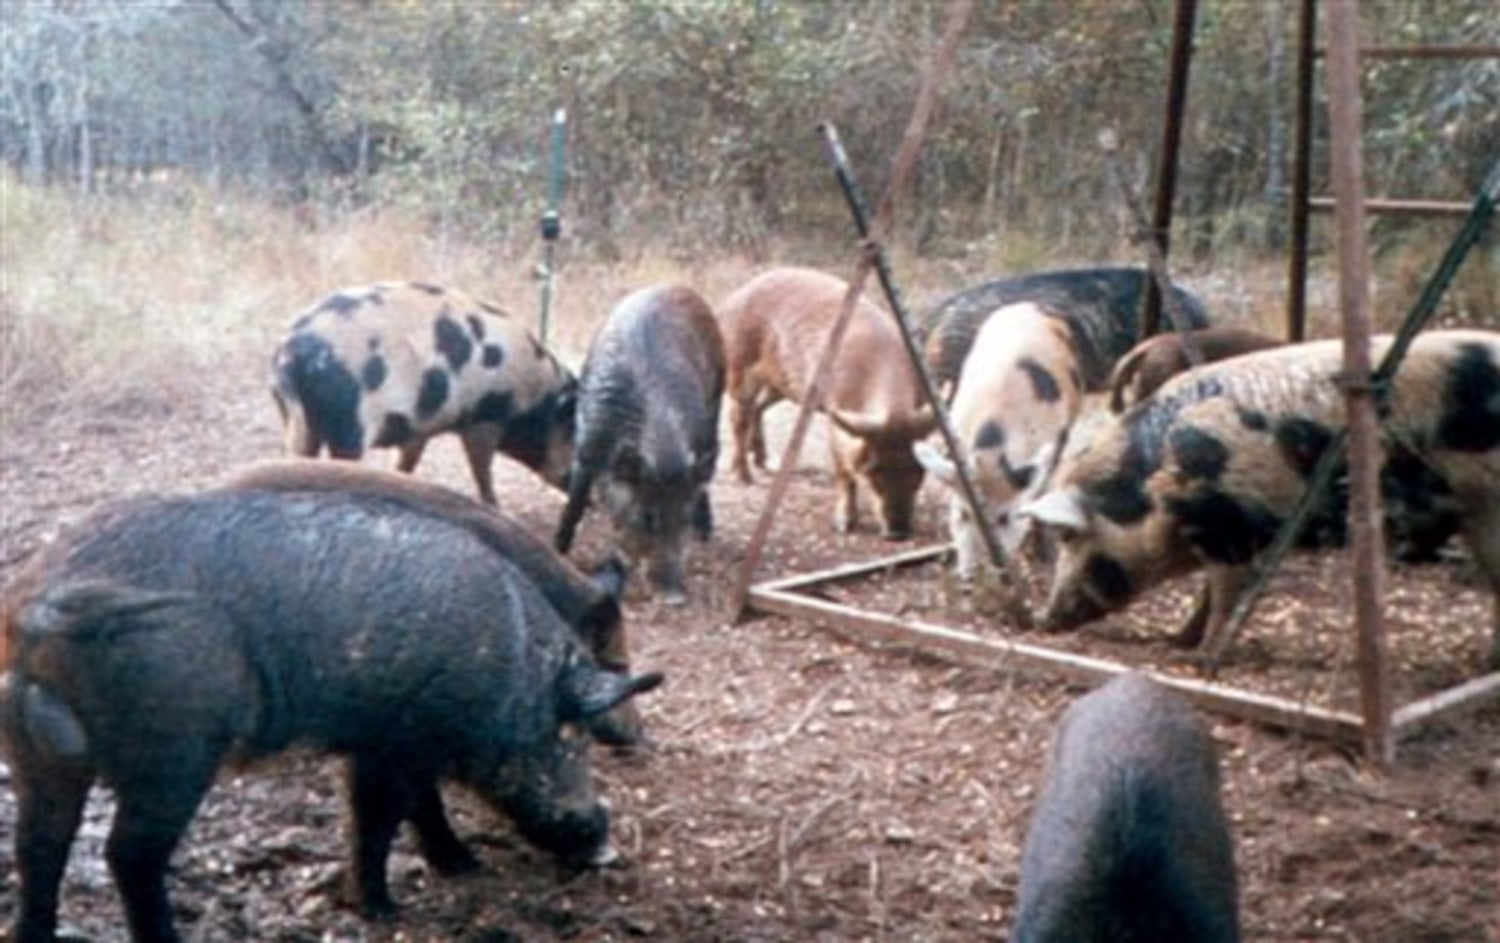 Record rain in Texas means wild hog boom